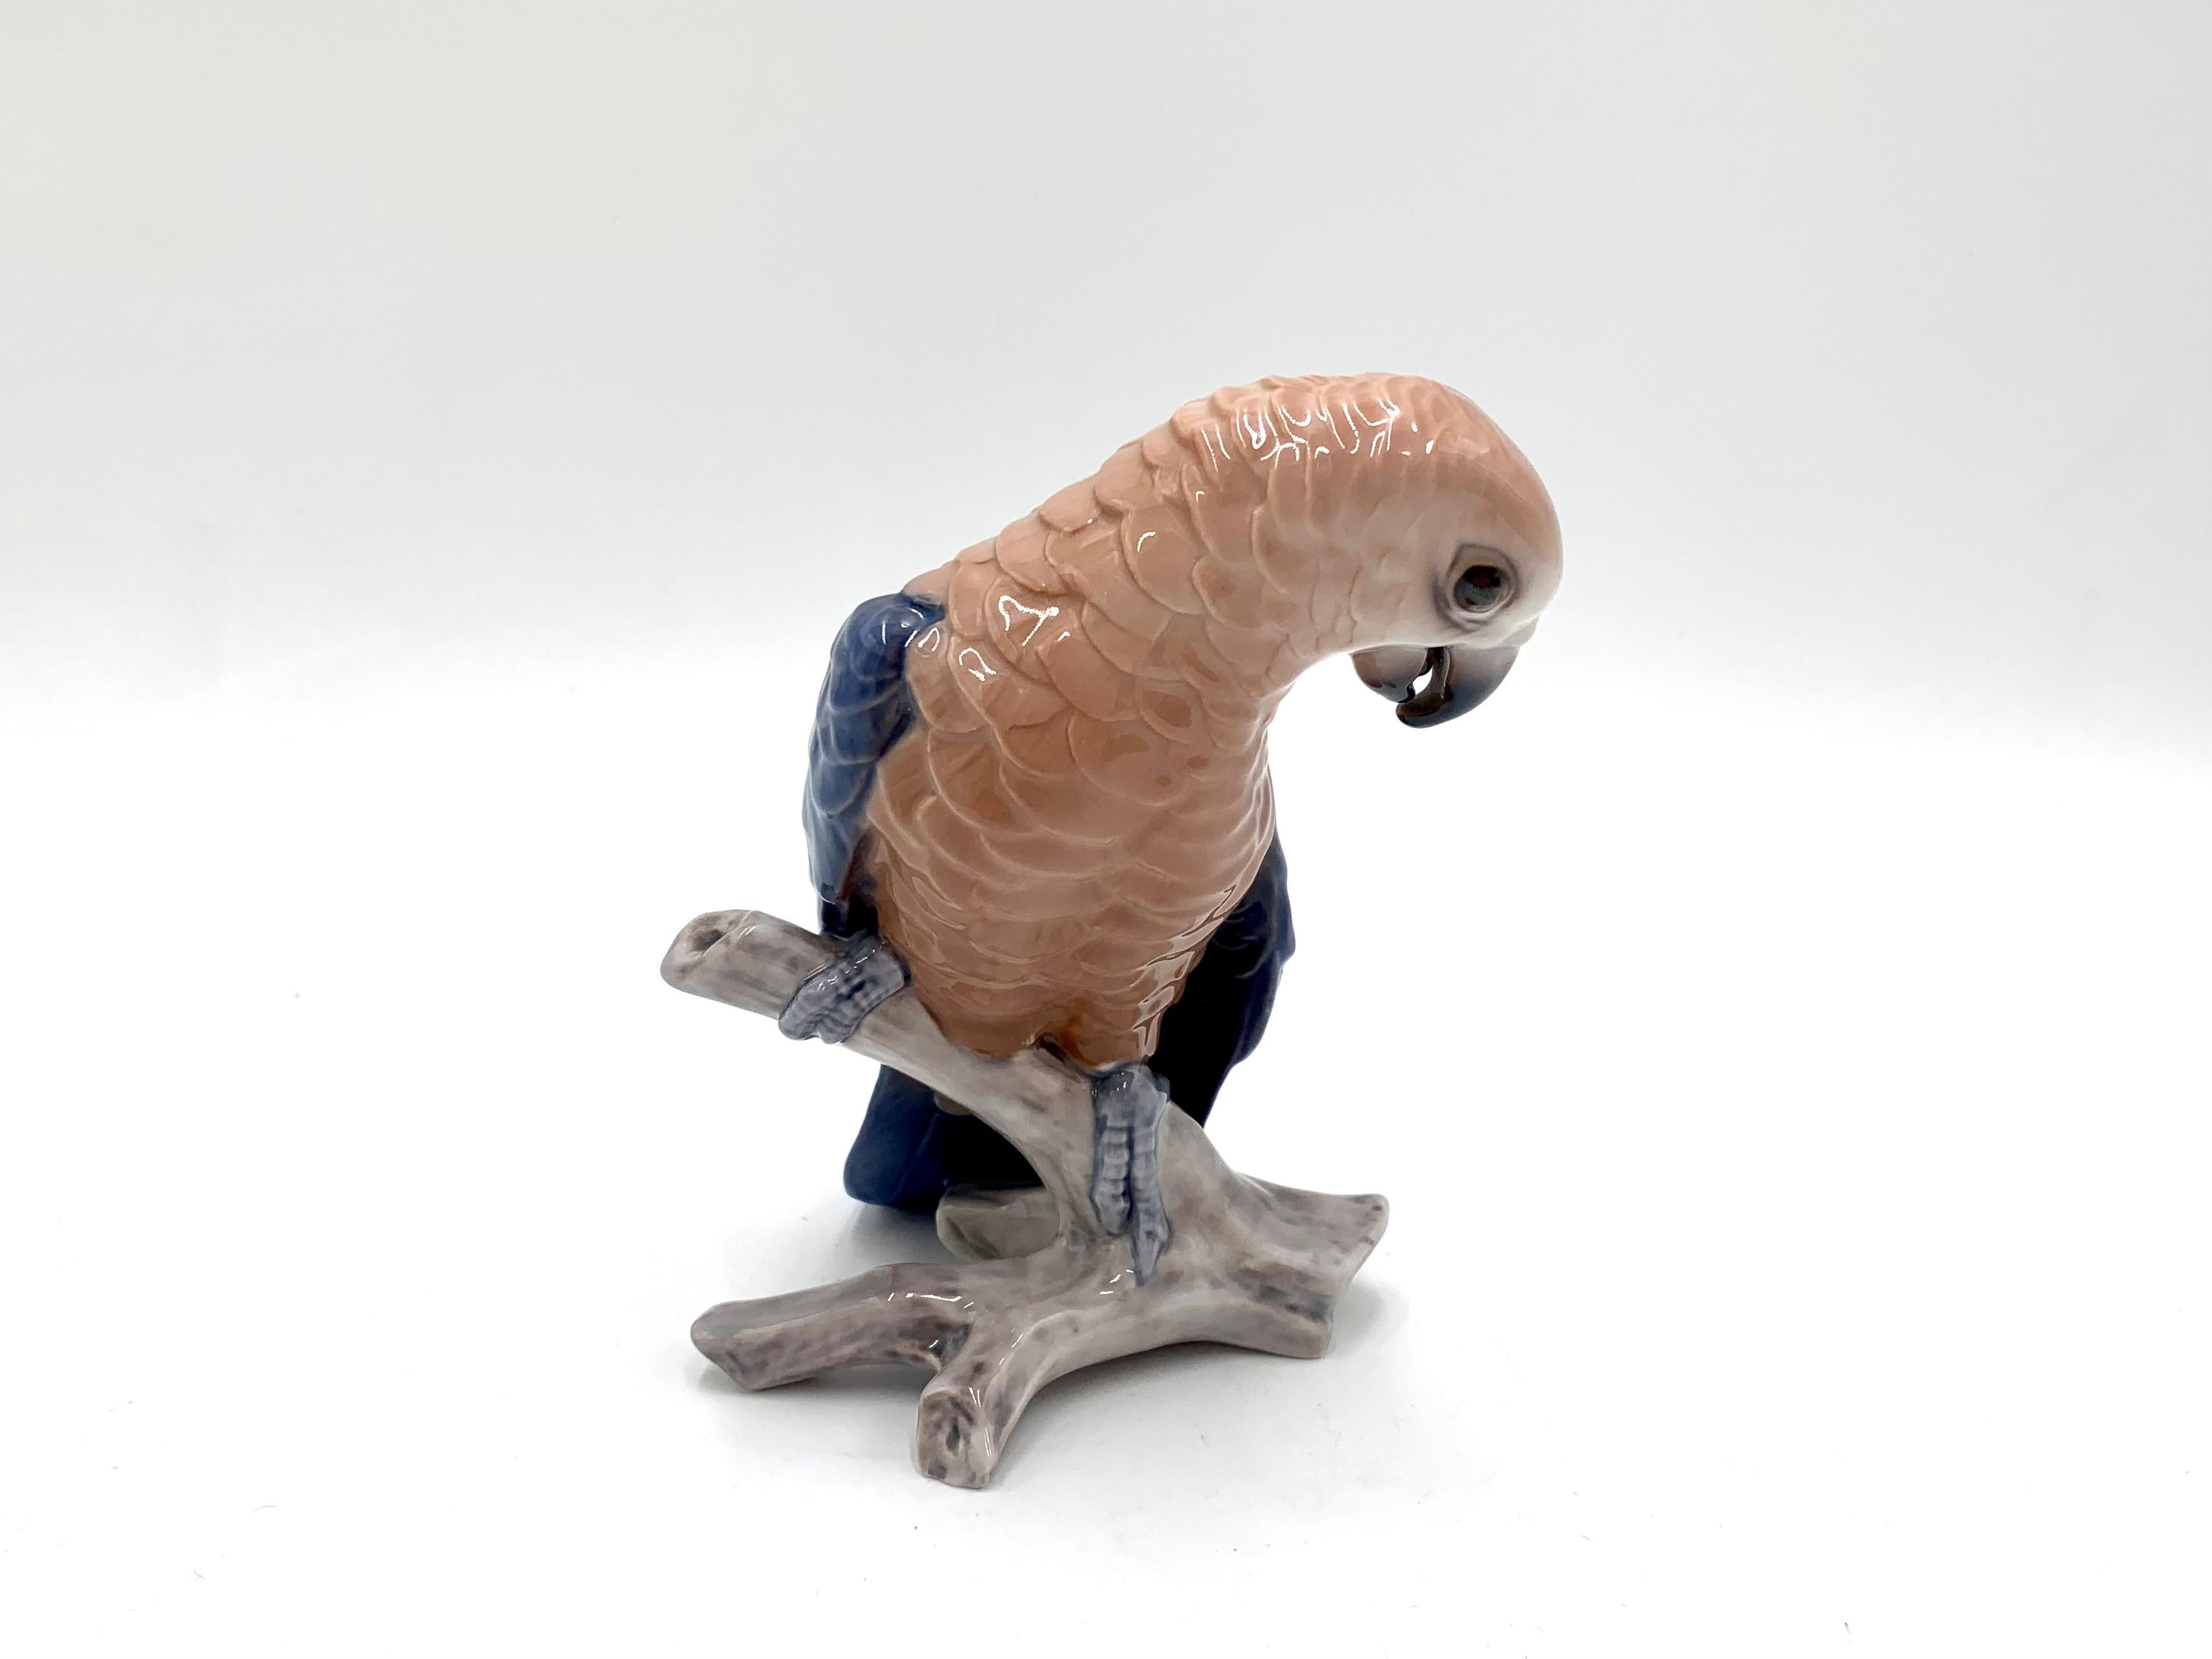 Mid-Century Modern Porcelain Figurine of a Parrot, Bing & Grondahl, Denmark